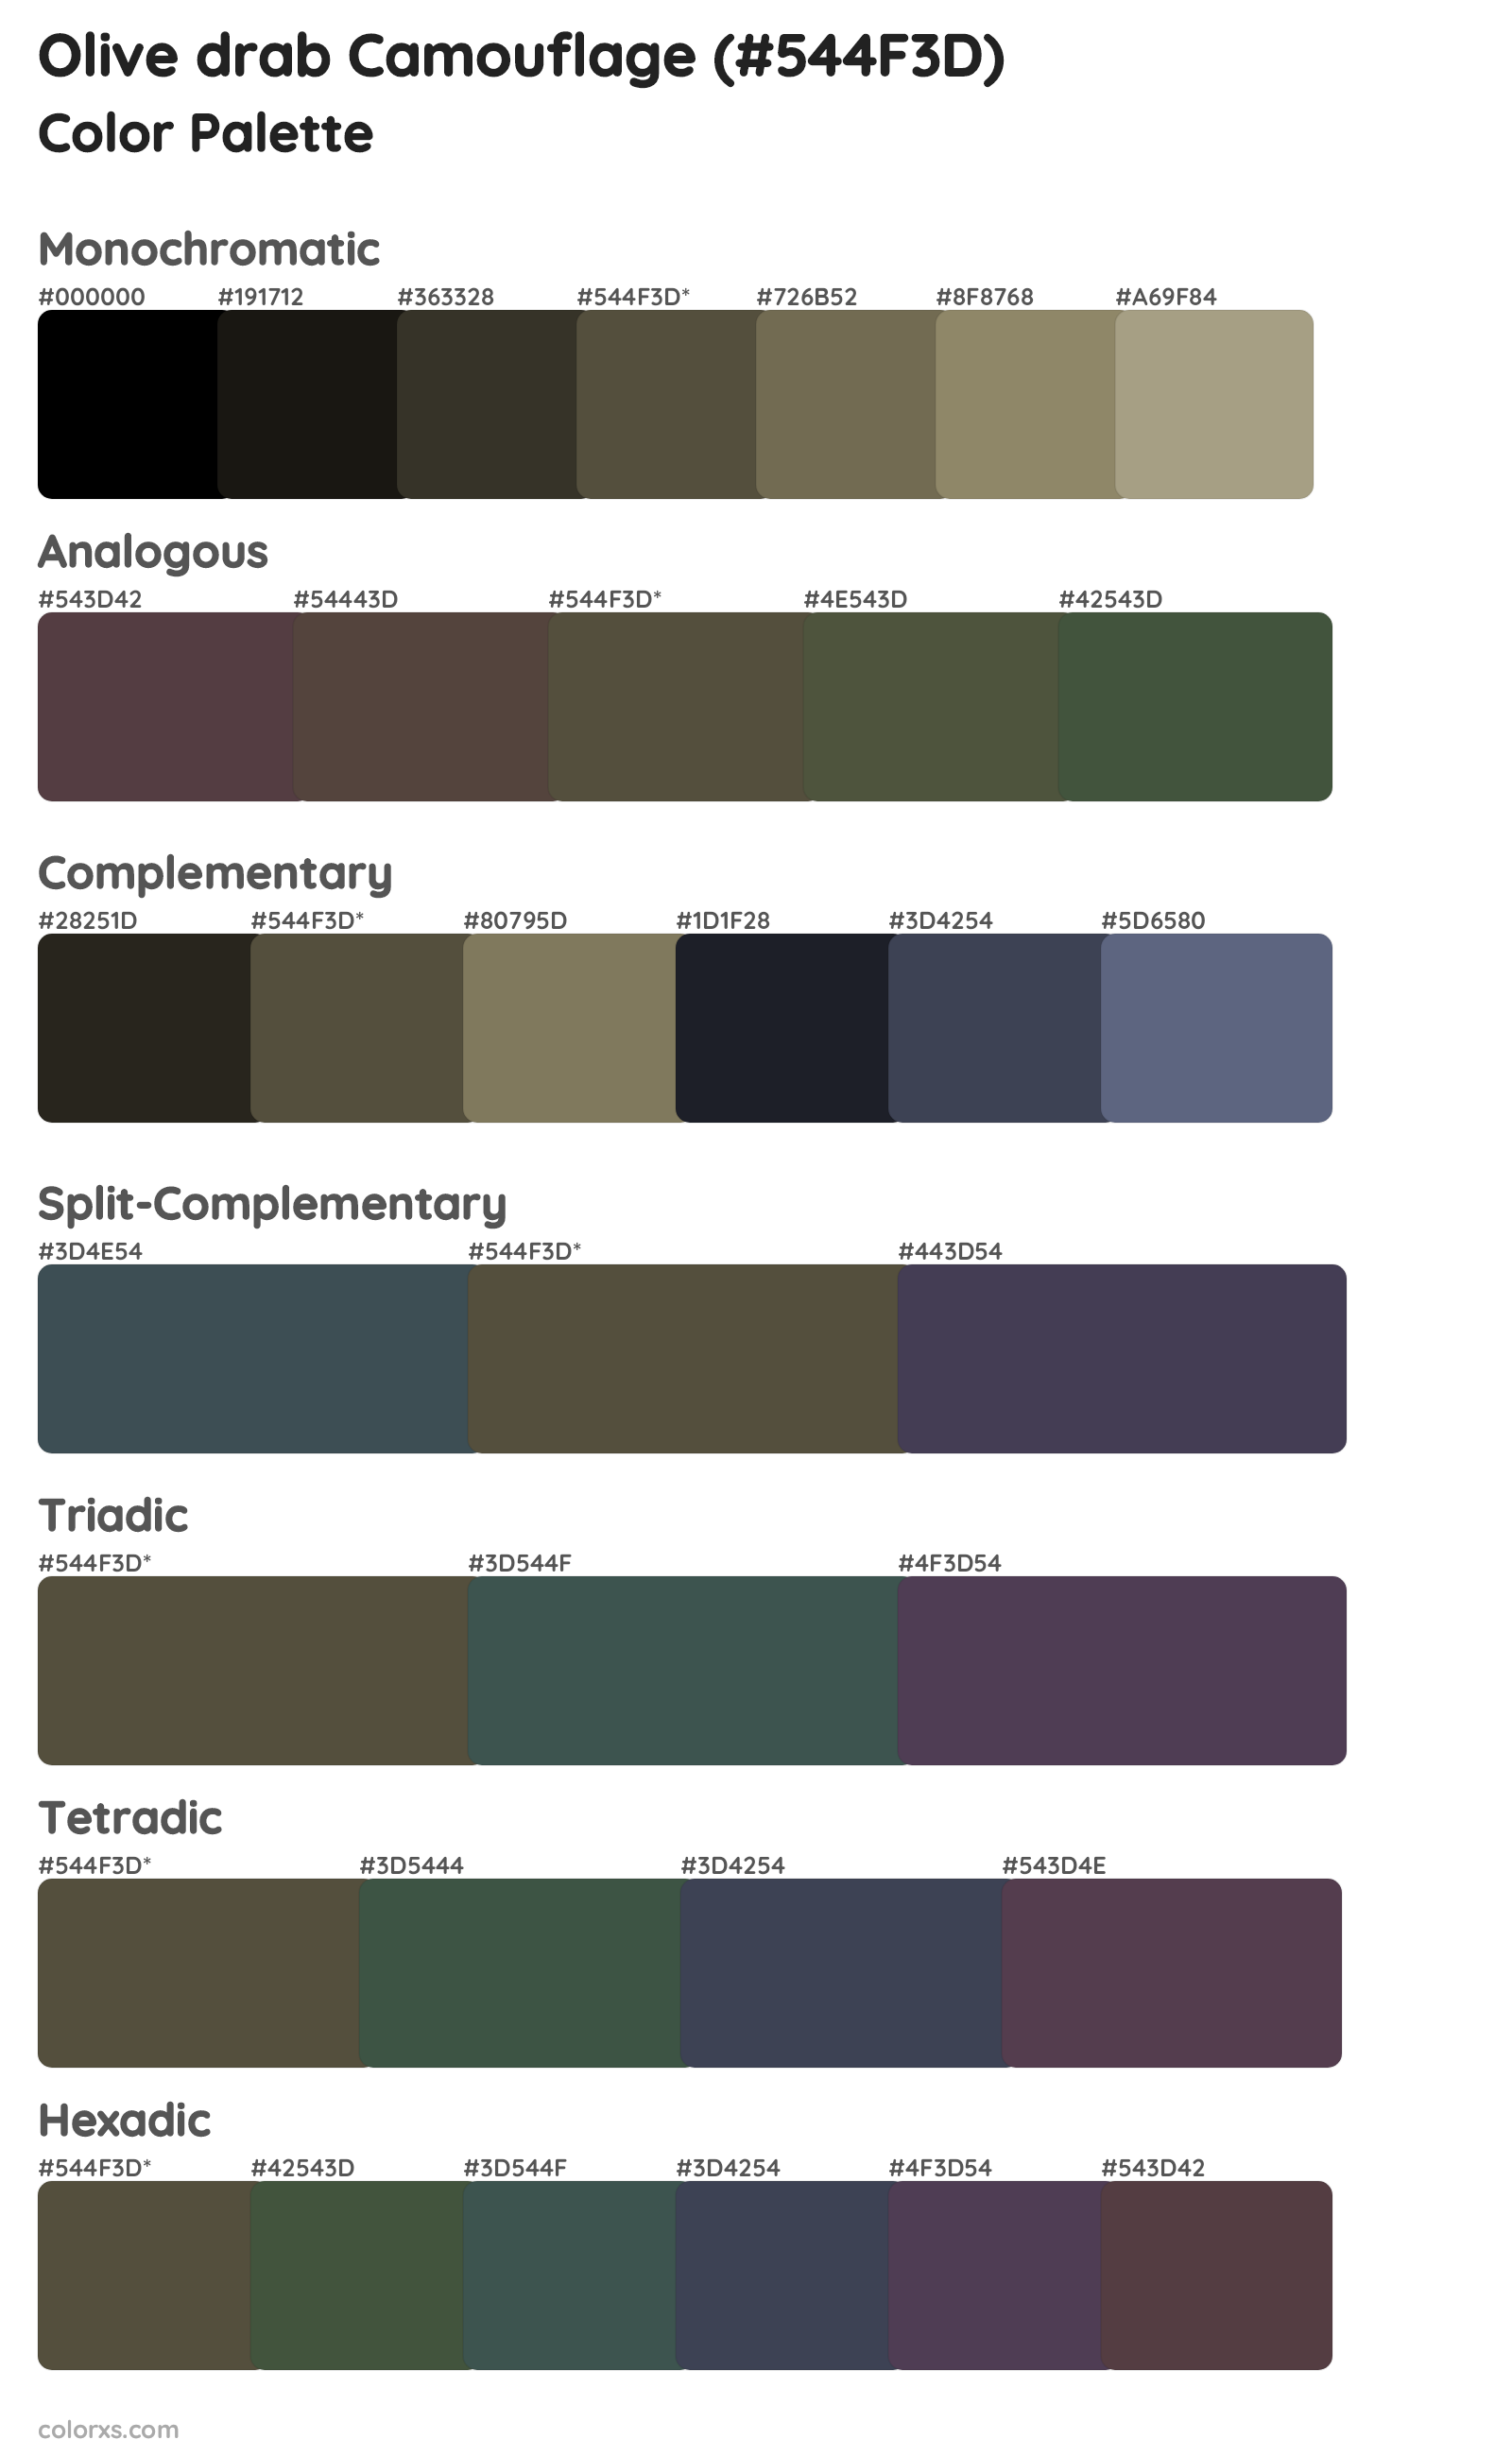 Olive drab Camouflage Color Scheme Palettes